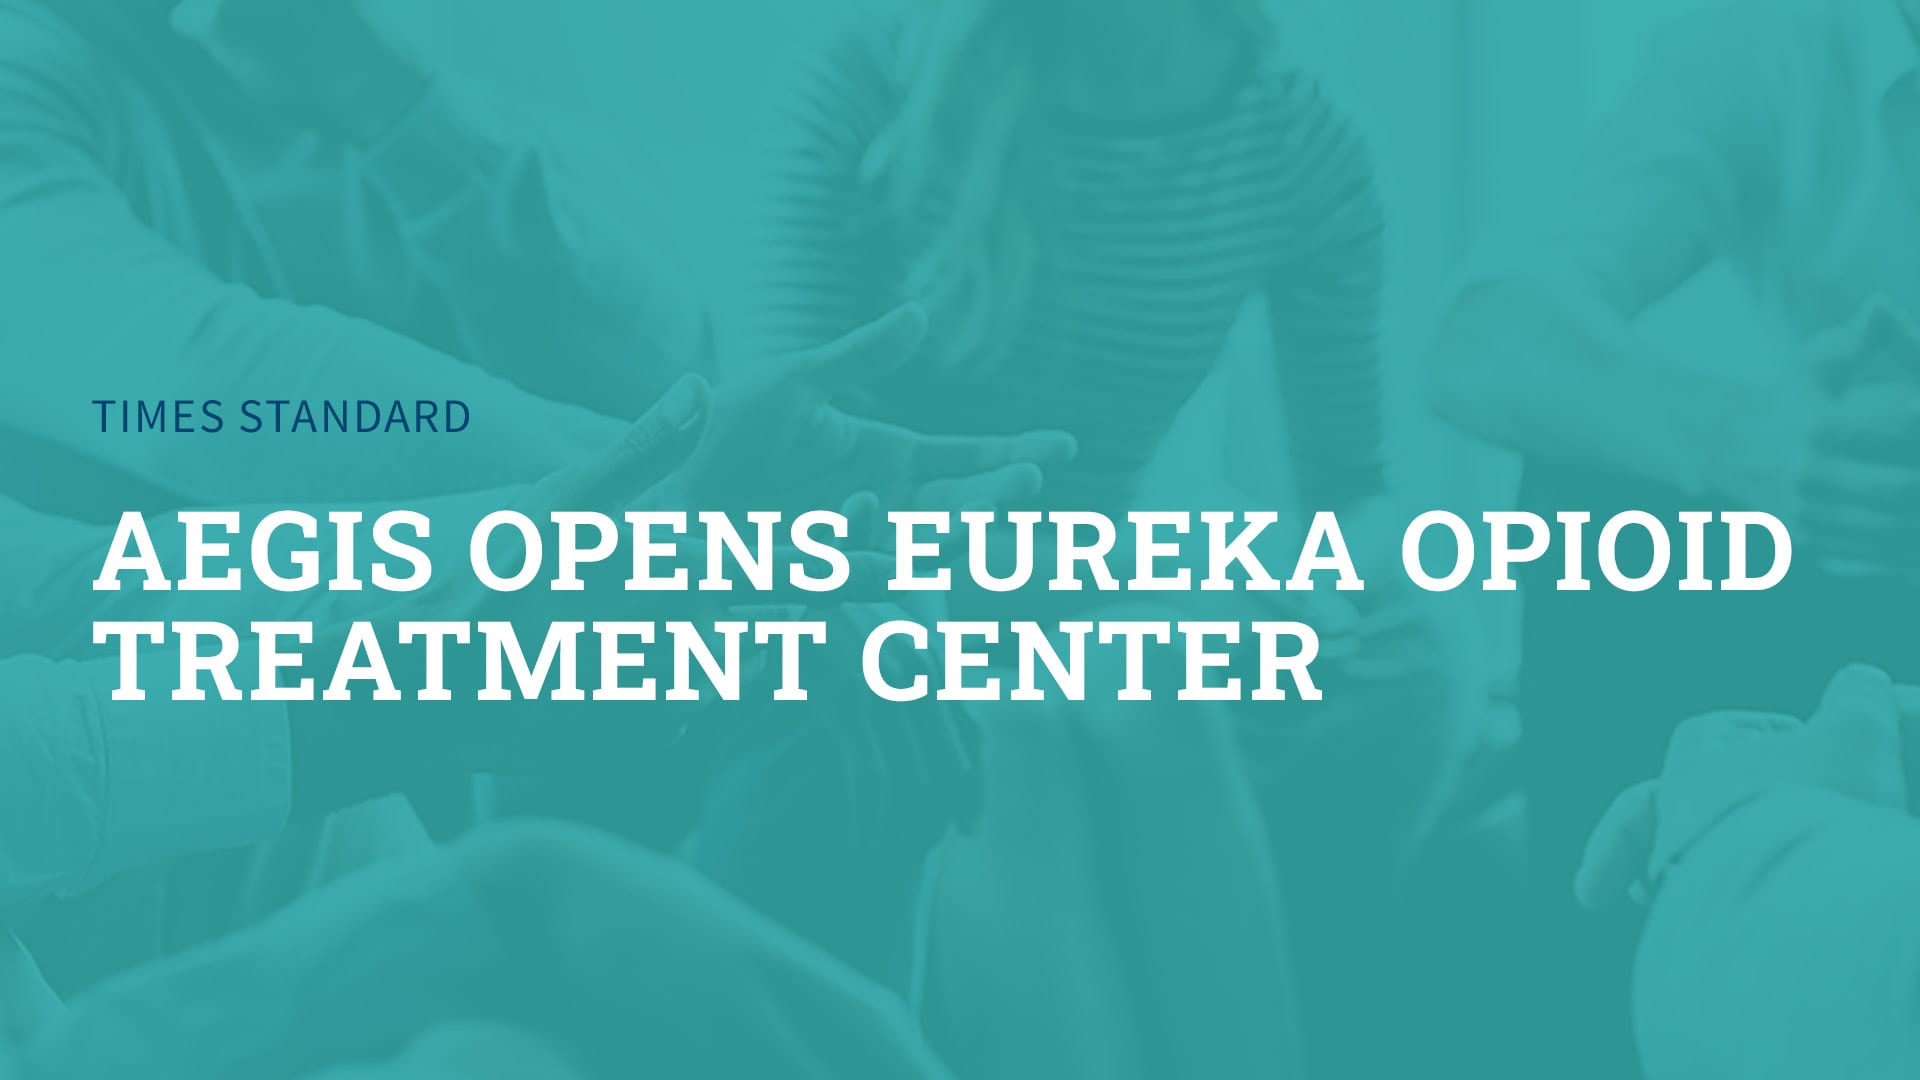 Aegis opens Eureka opioid treatment center